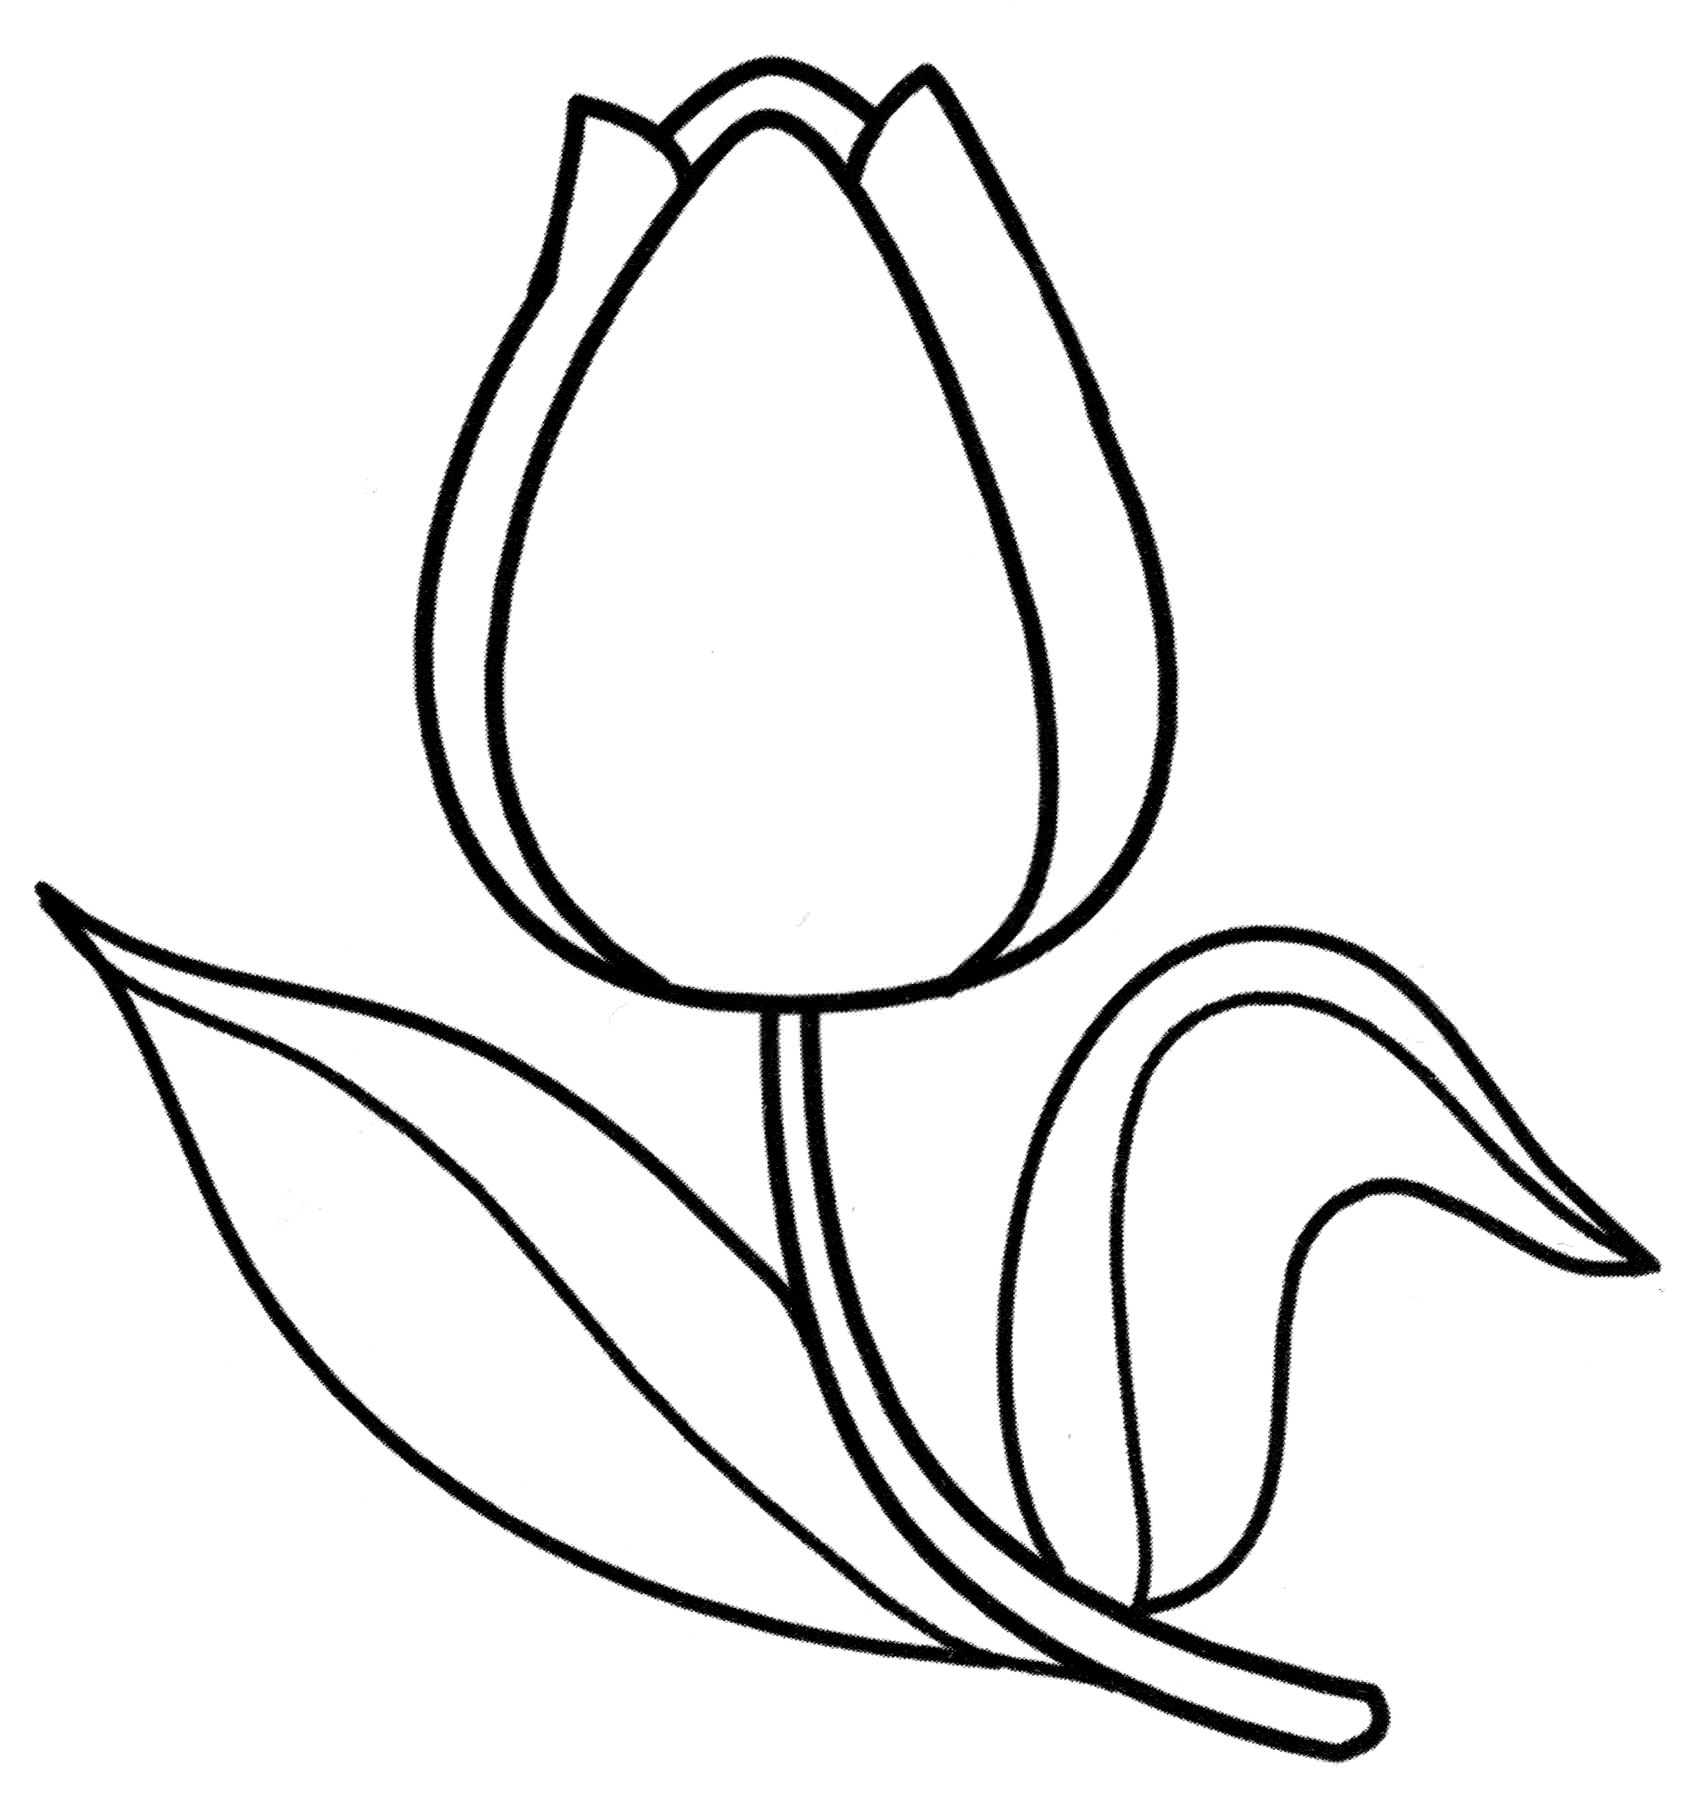 Розмальовка Тюльпан